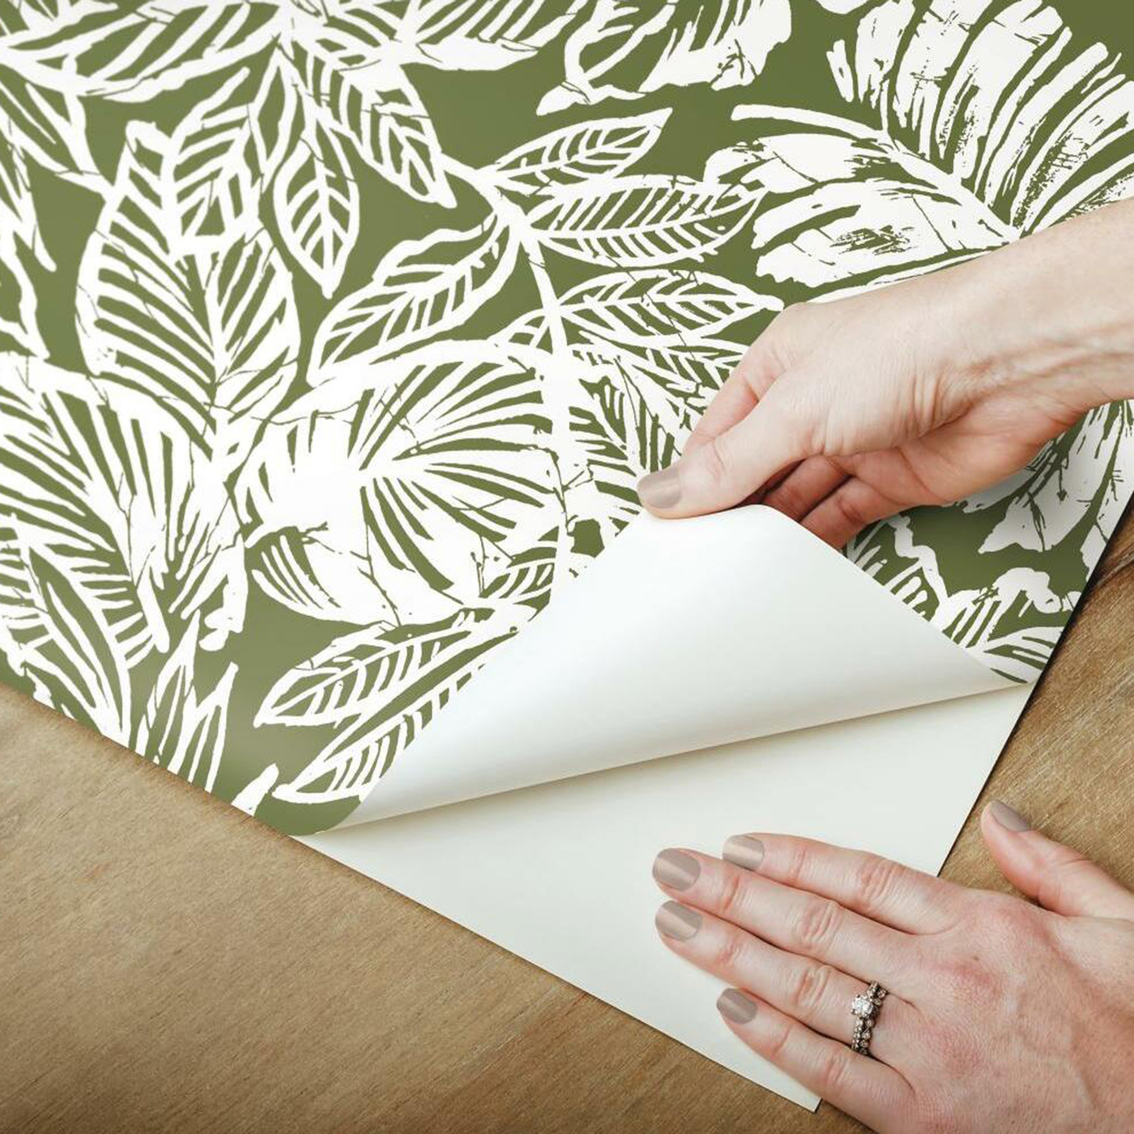 RoomMates Batik Tropical Leaf Peel and Stick Wallpaper - Image 2 of 7